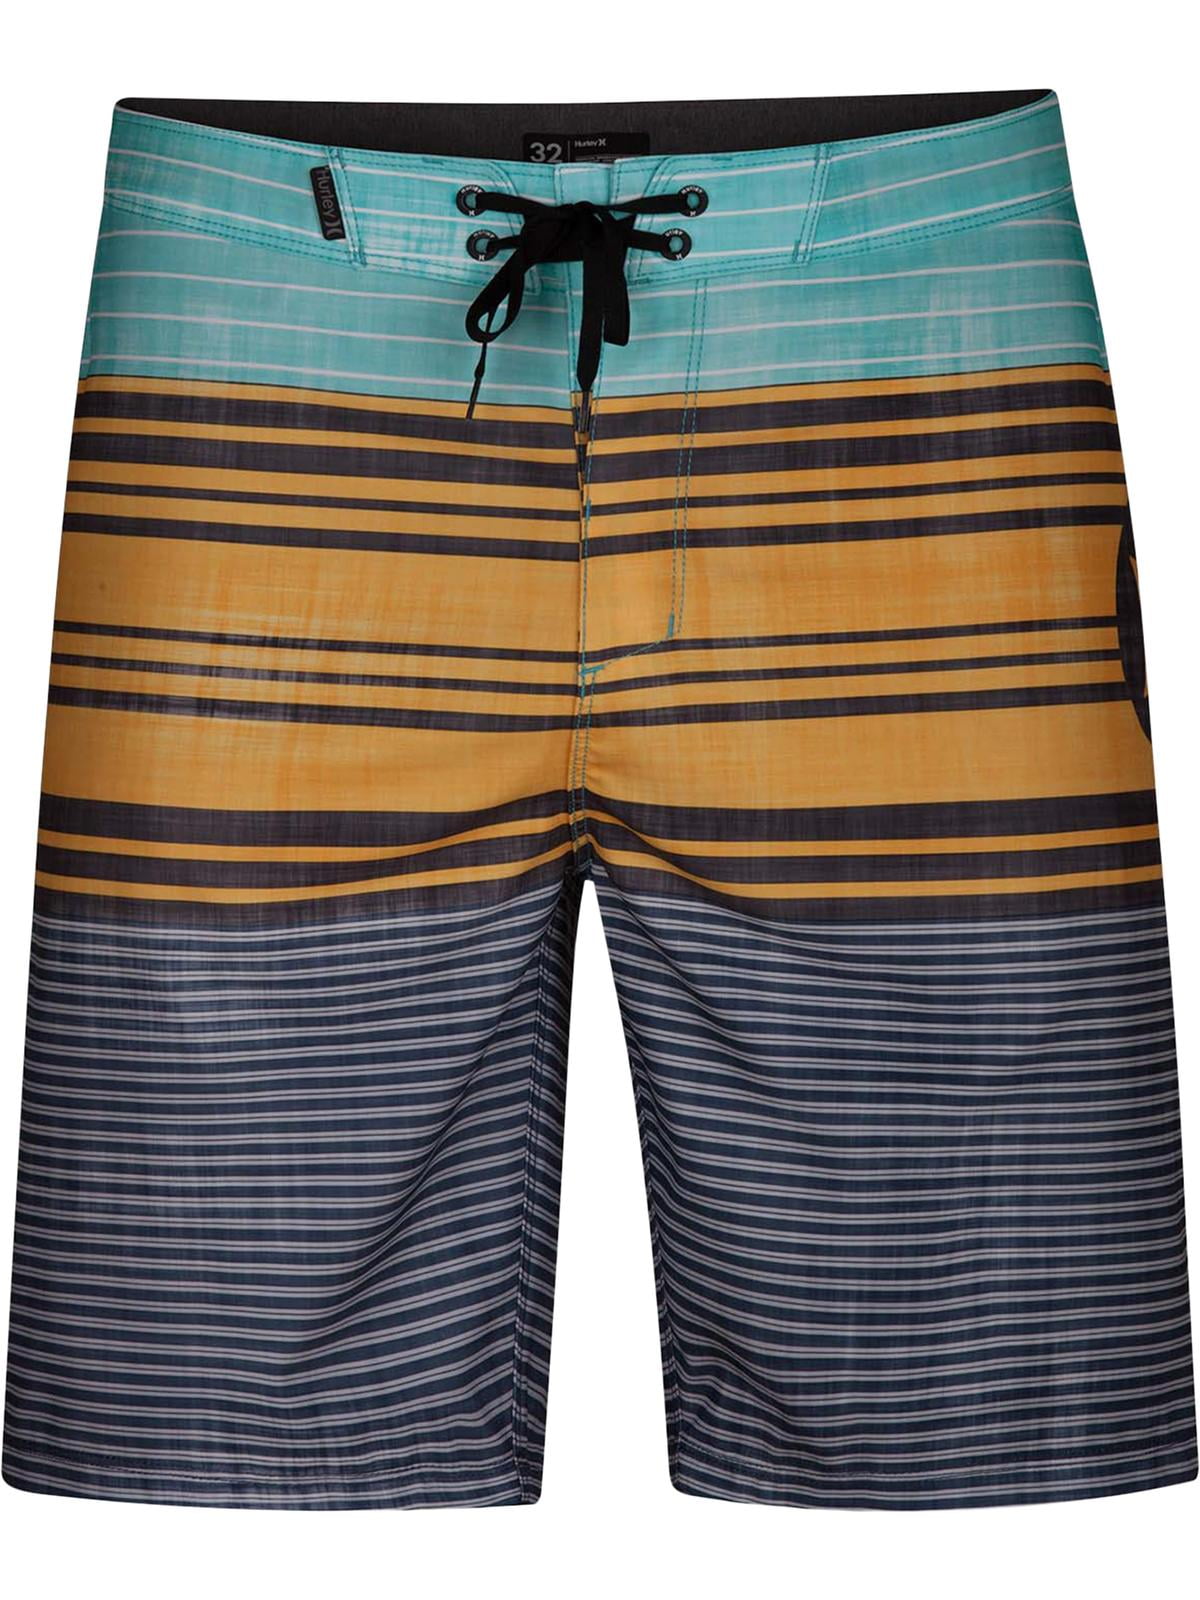 Hurley - Hurley Mens Striped Swim Trunks Board Shorts - Walmart.com ...